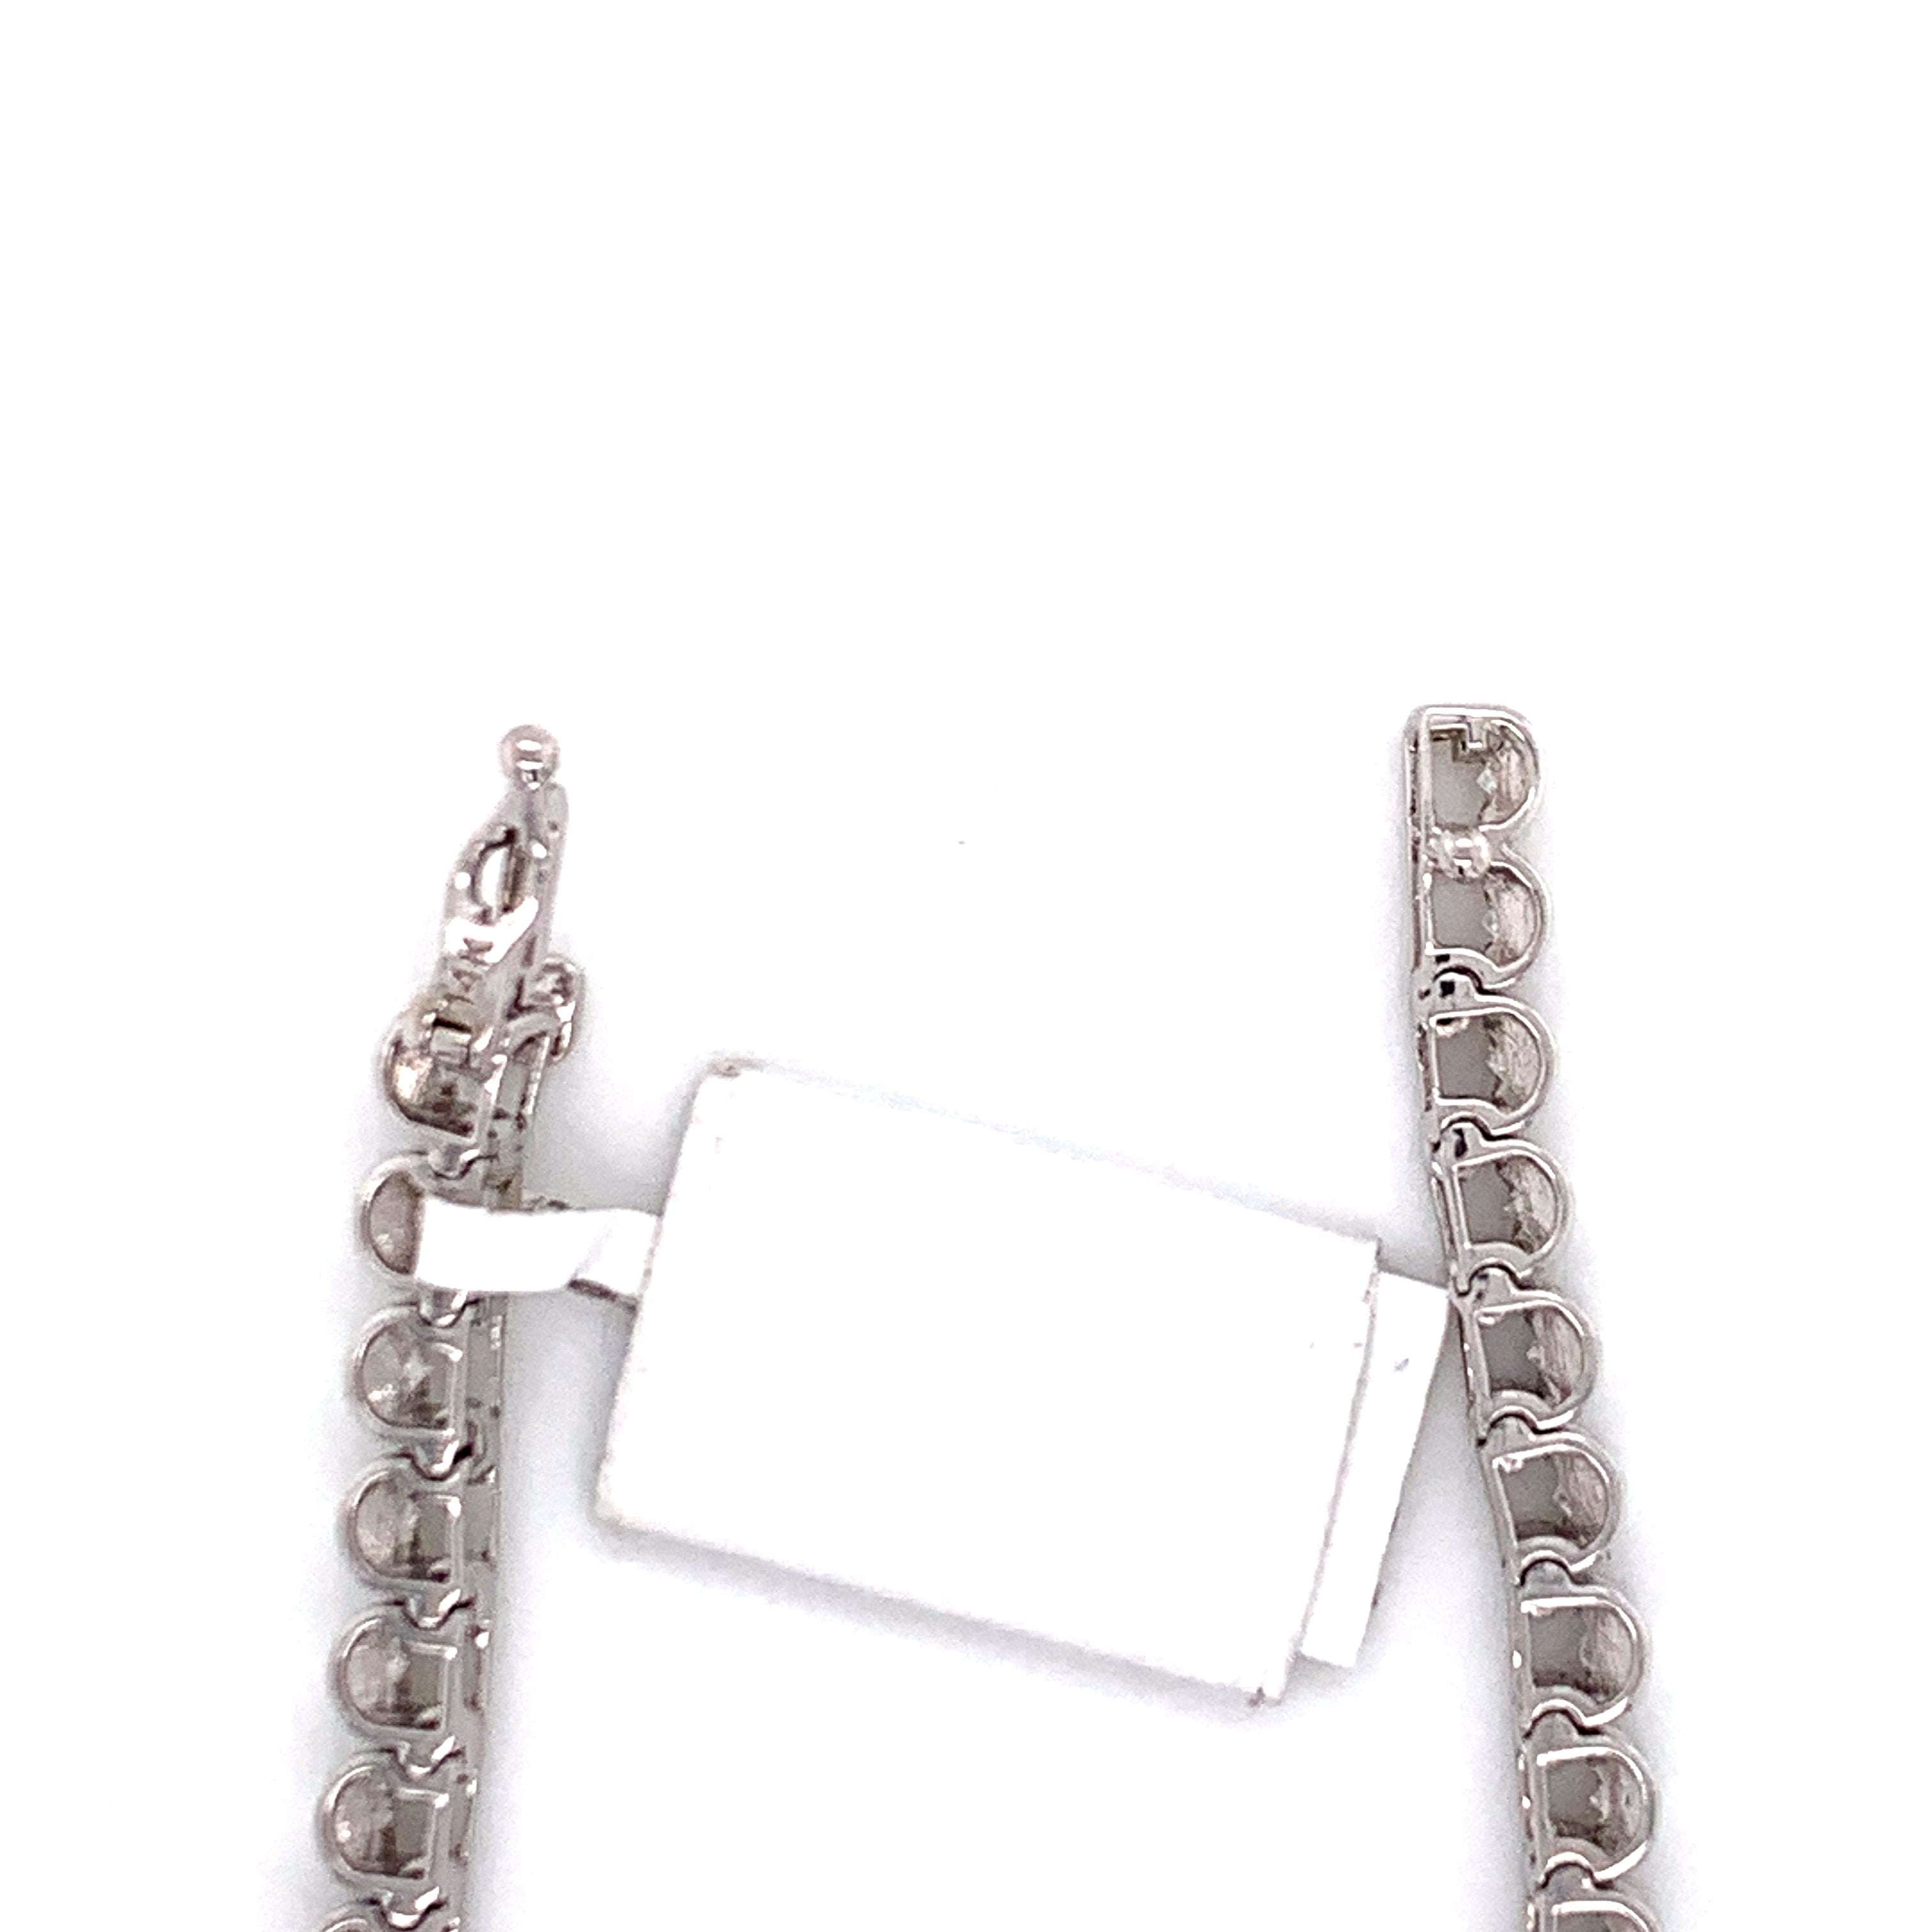 3.00CT Diamond Tennis Bracelet in 14K White Gold - White Carat Diamonds 